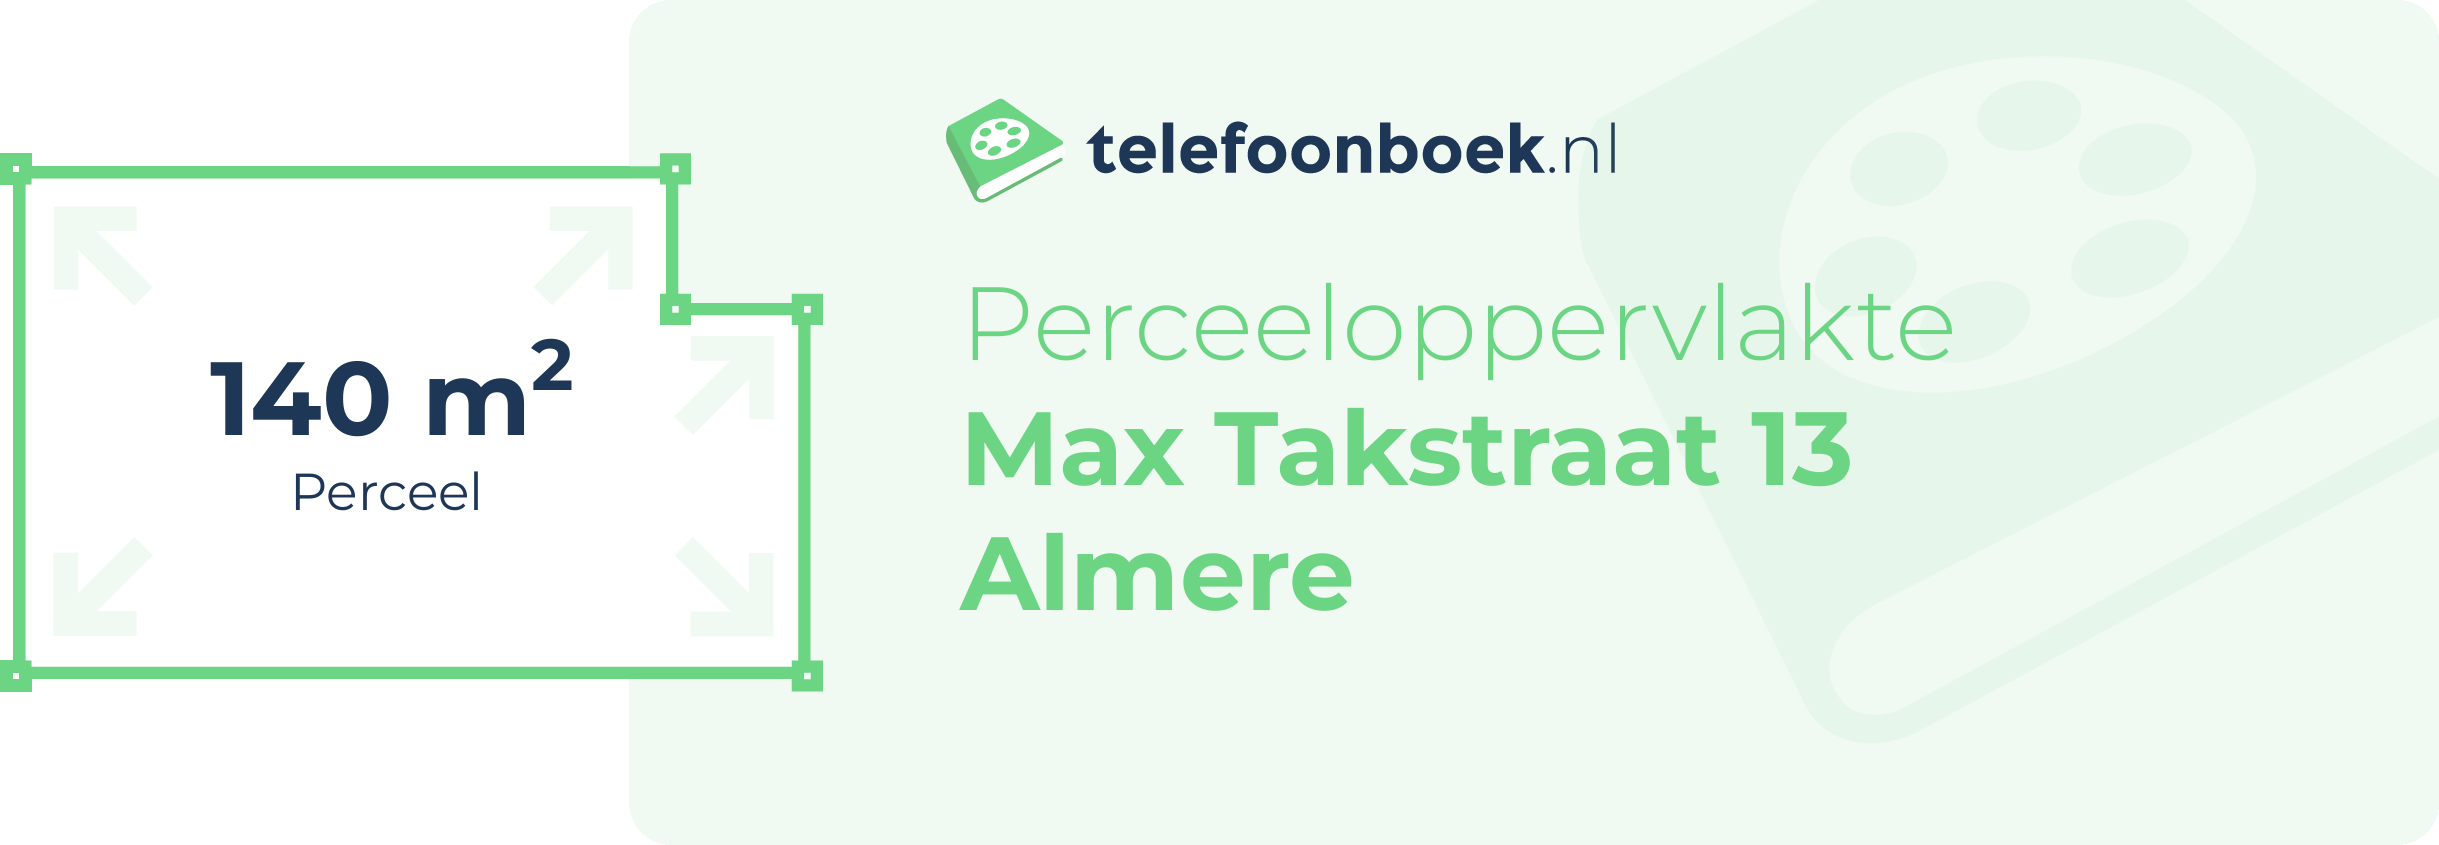 Perceeloppervlakte Max Takstraat 13 Almere